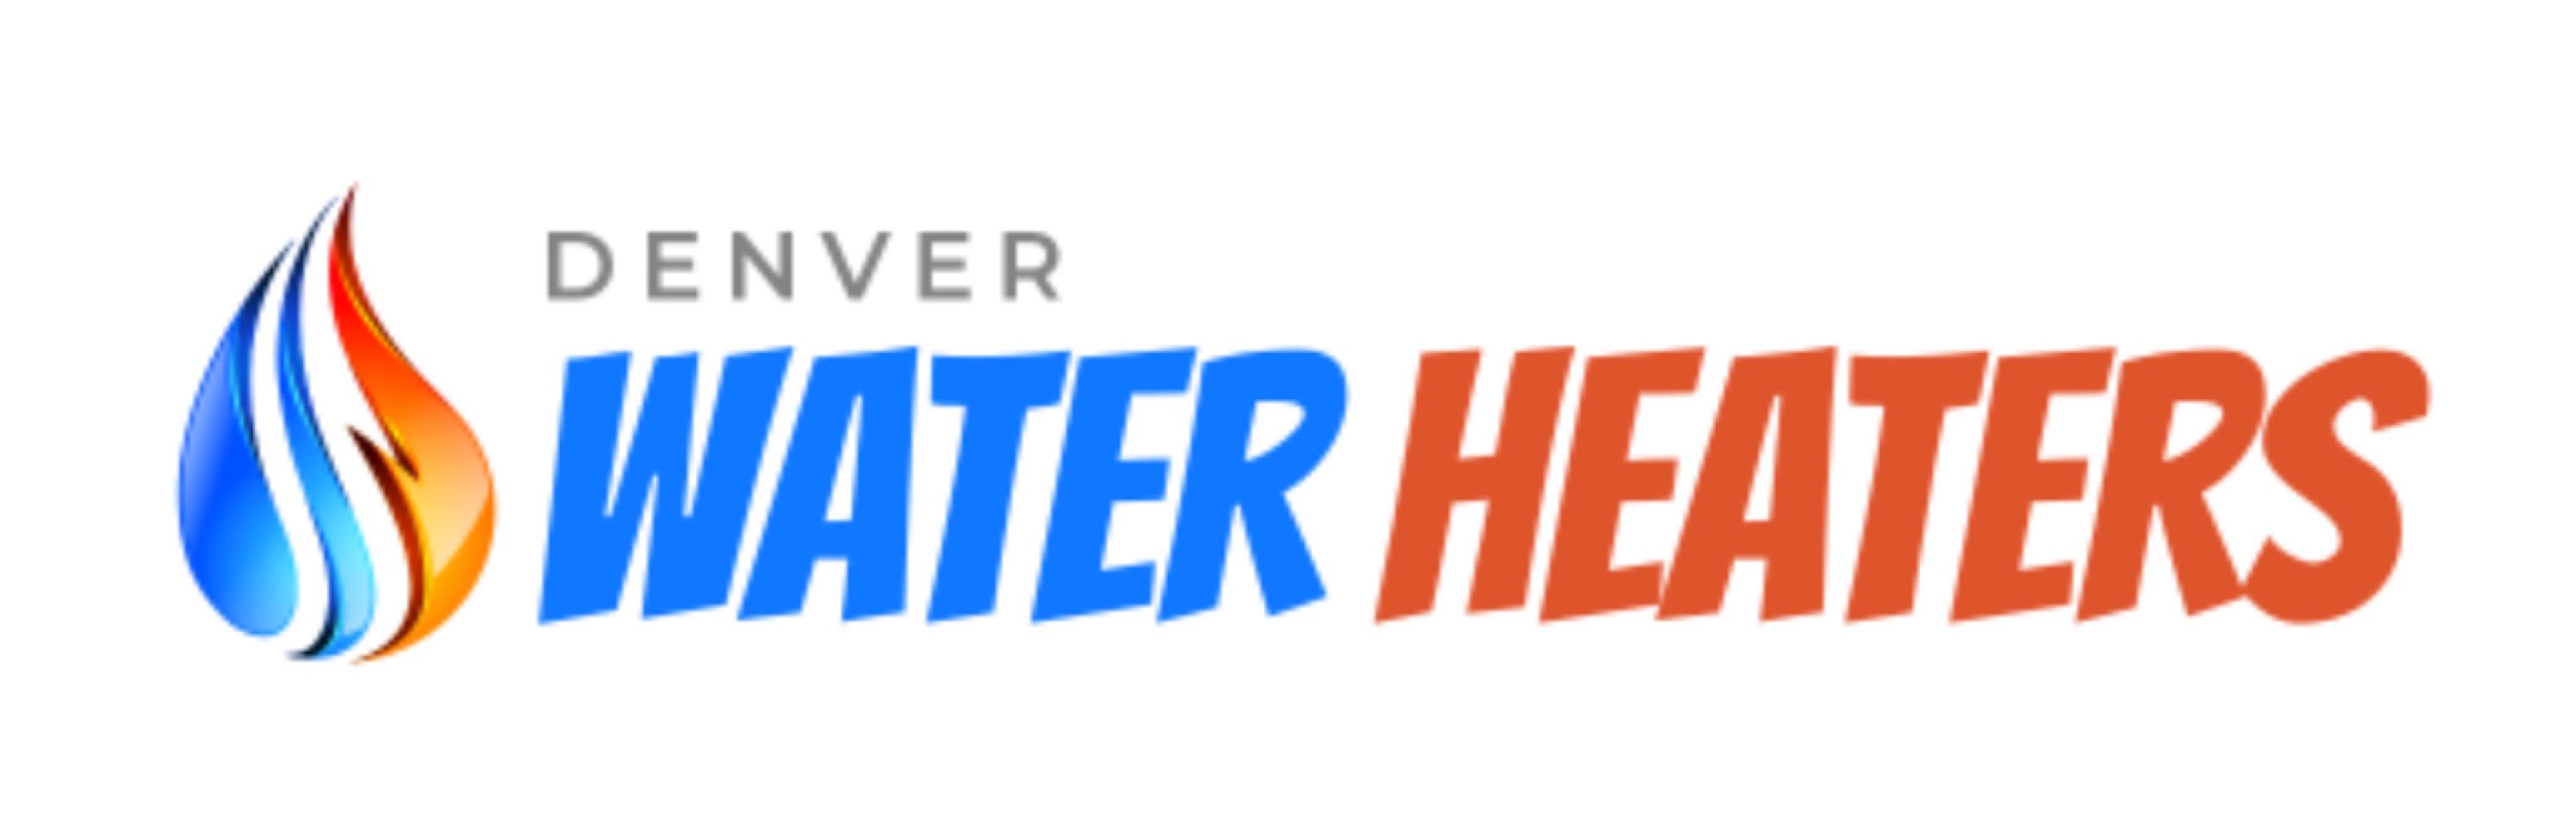 Denver Water Heaters Logo